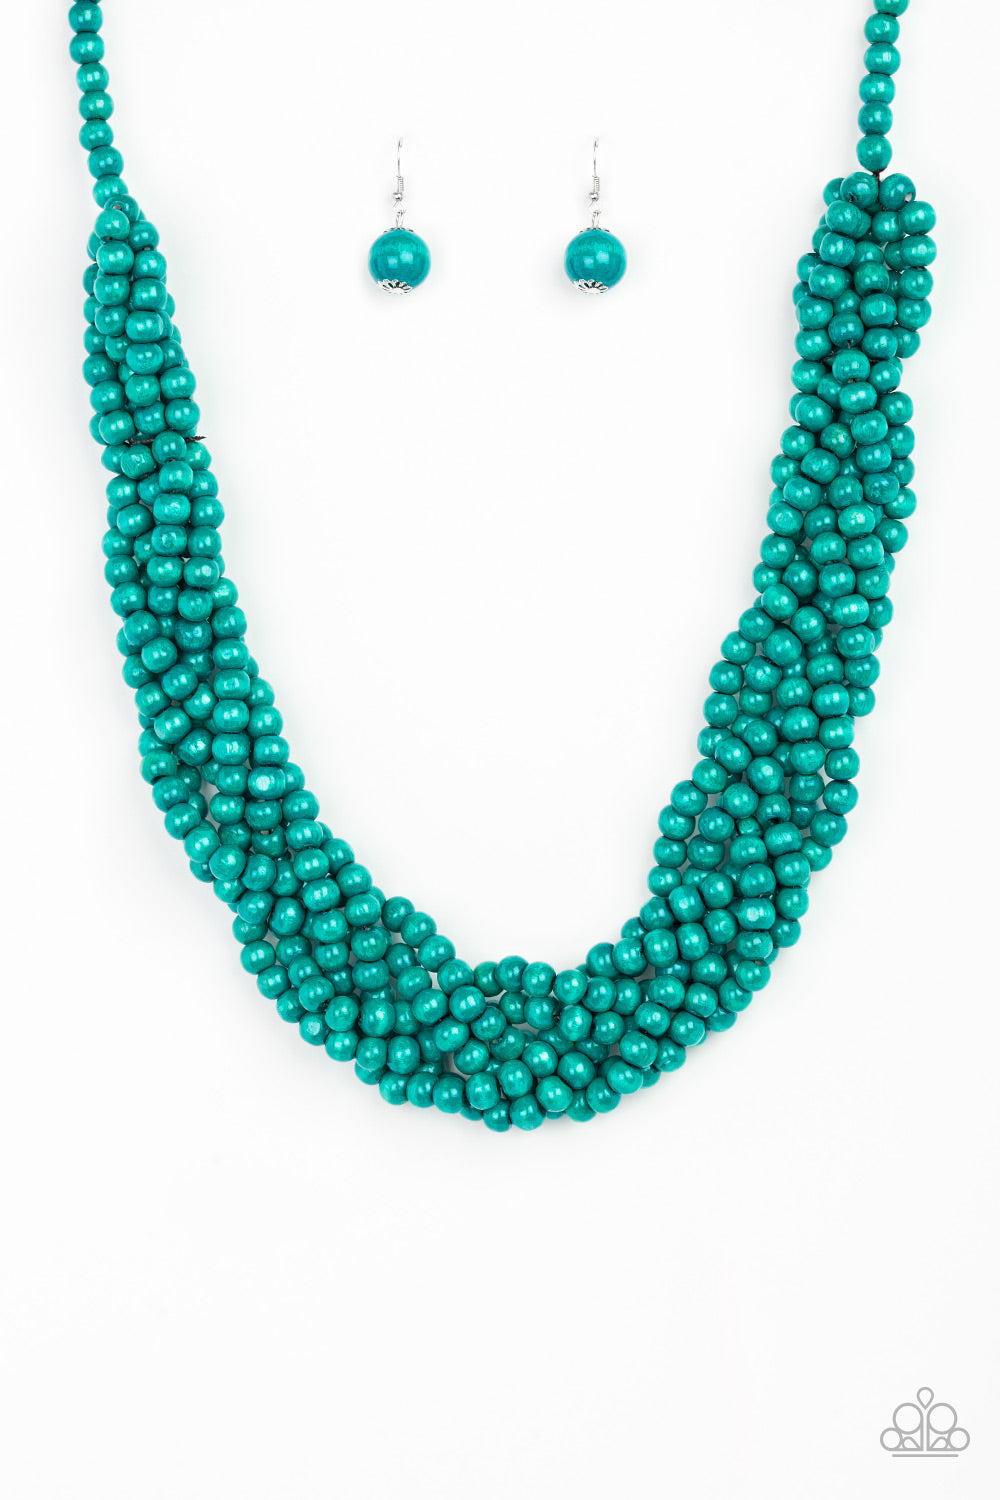 Paparazzi Accessories  - Tahiti Tropic #N130 Blue Necklace